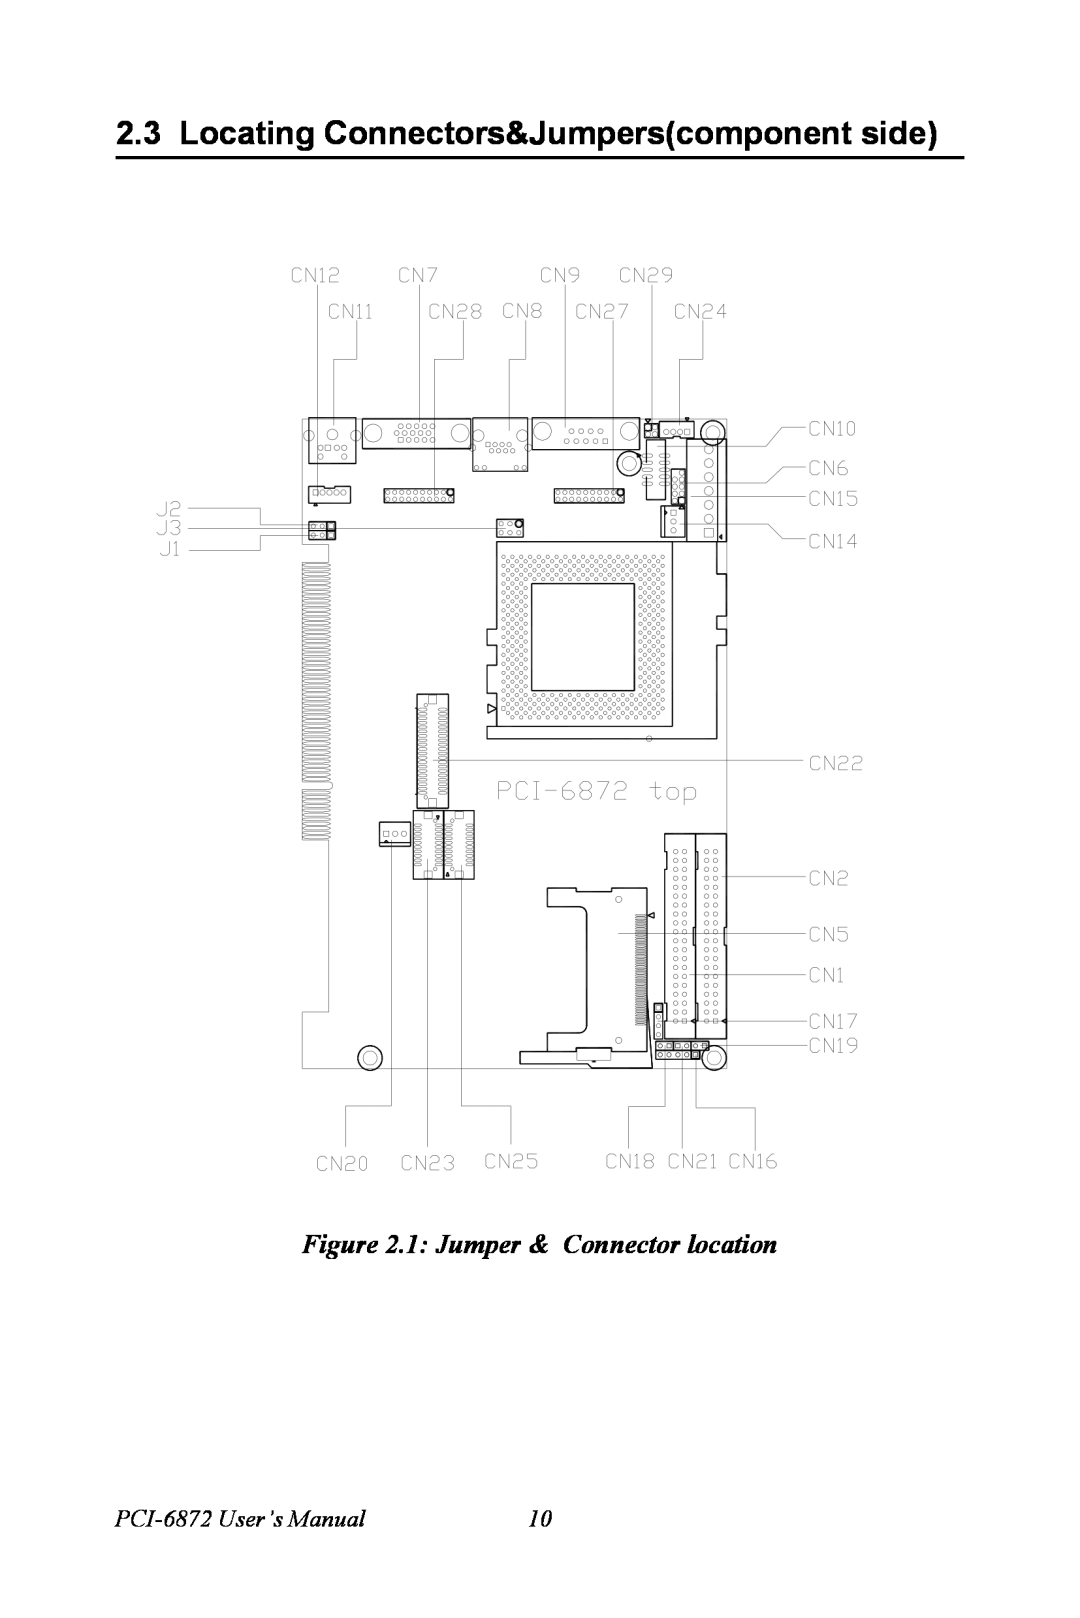 Advantech user manual Locating Connectors&Jumperscomponent side, 1 Jumper & Connector location, PCI-6872 User’s Manual 